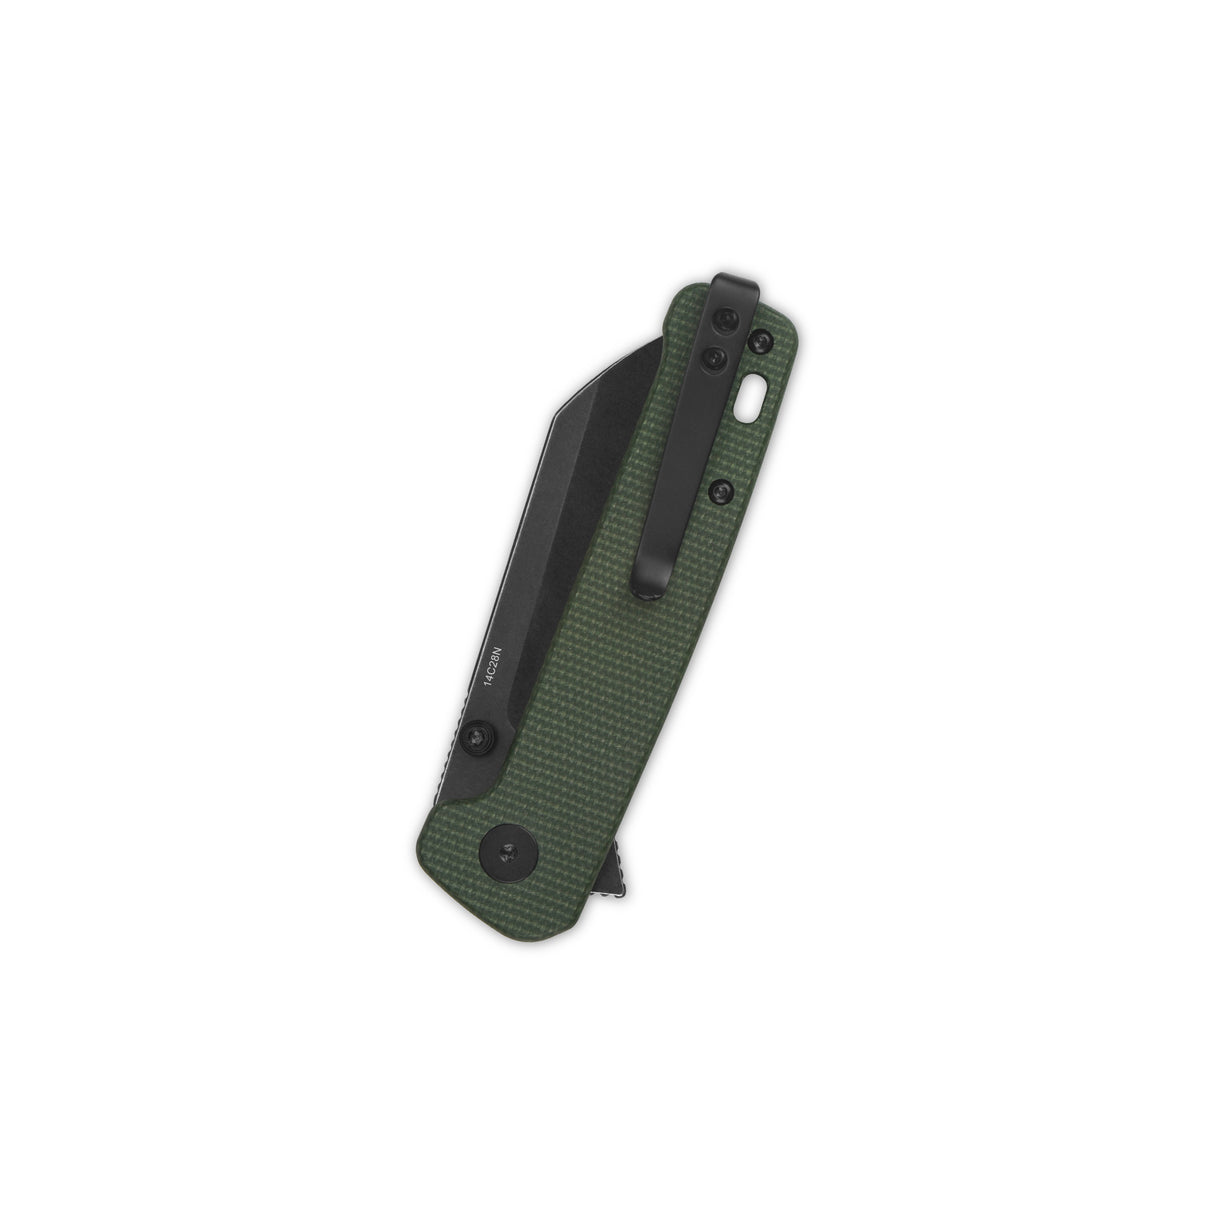 QSP Penguin Button Lock Pocket Knife 14C28N Blade Green Micarta Handle